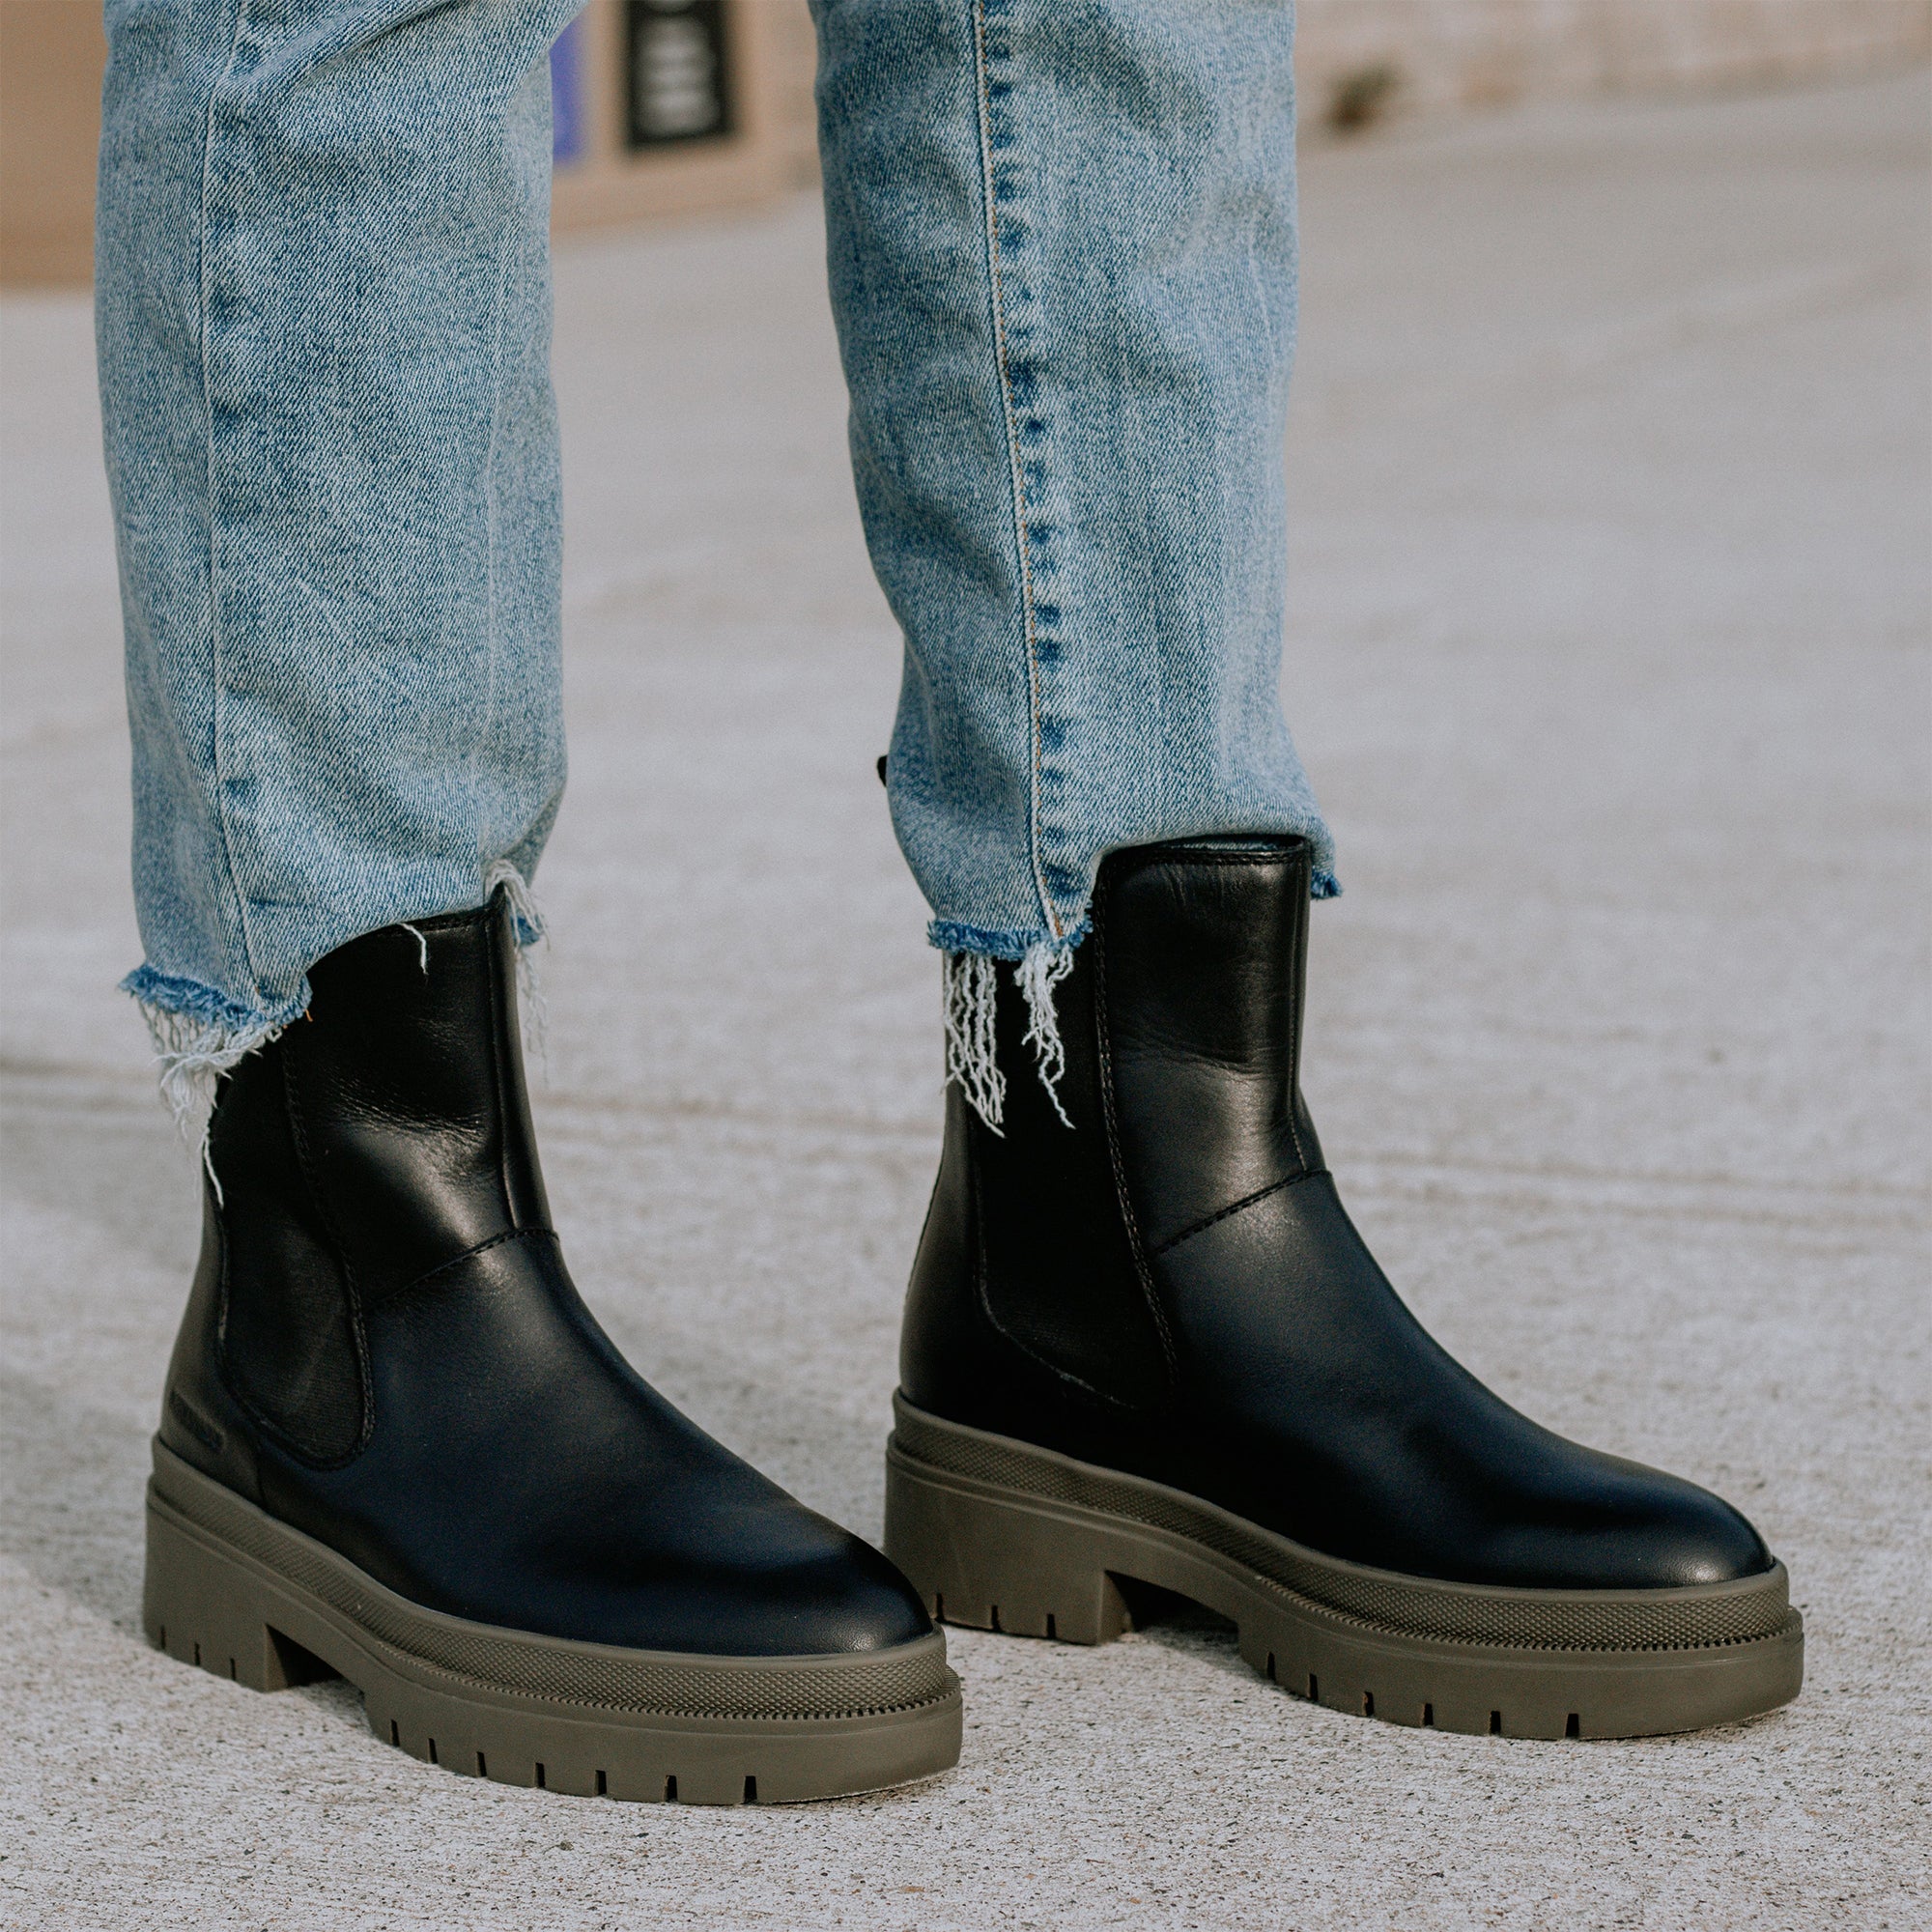 Swinton Leather Waterproof Boot - Color Black-DK Olive